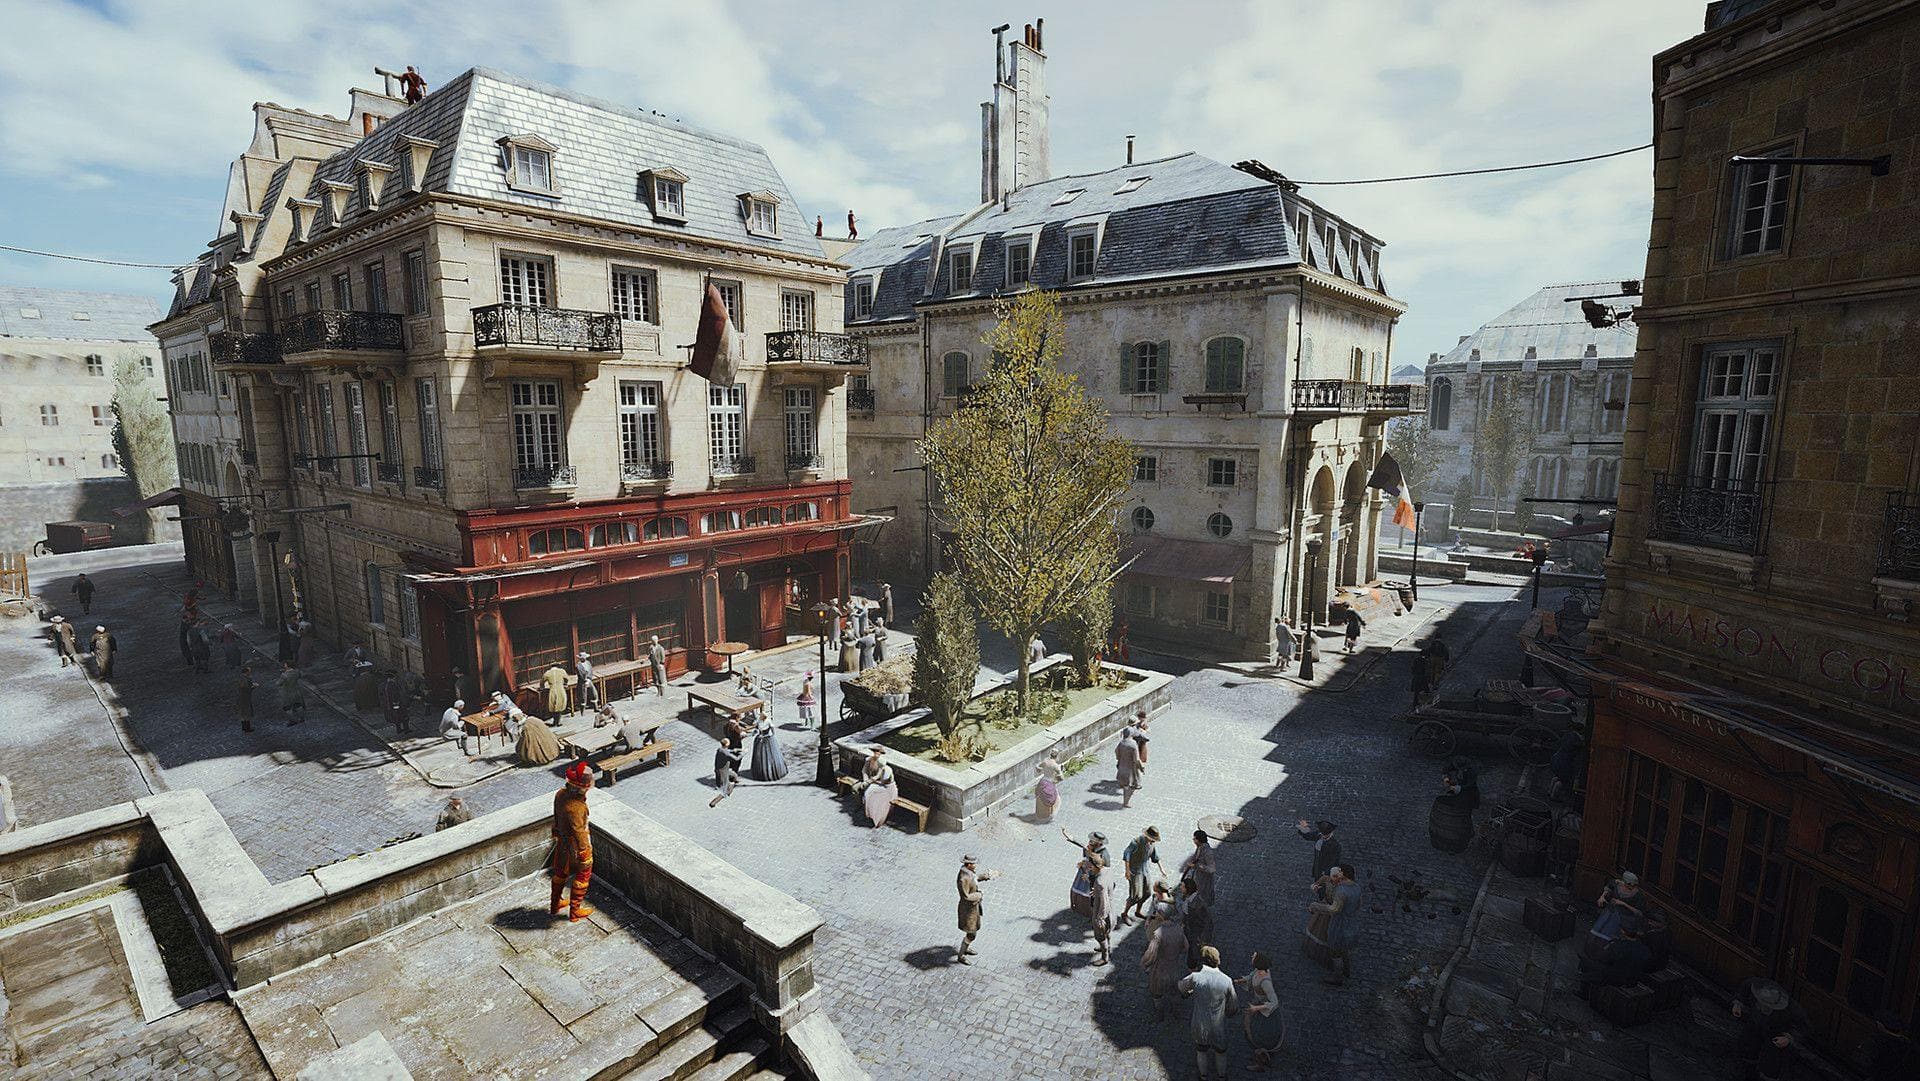 Assassins Creed: Unity - Xbox One | Series X/S - EXON גיימס - משחקים ותוכנות למחשב ולאקס בוקס!